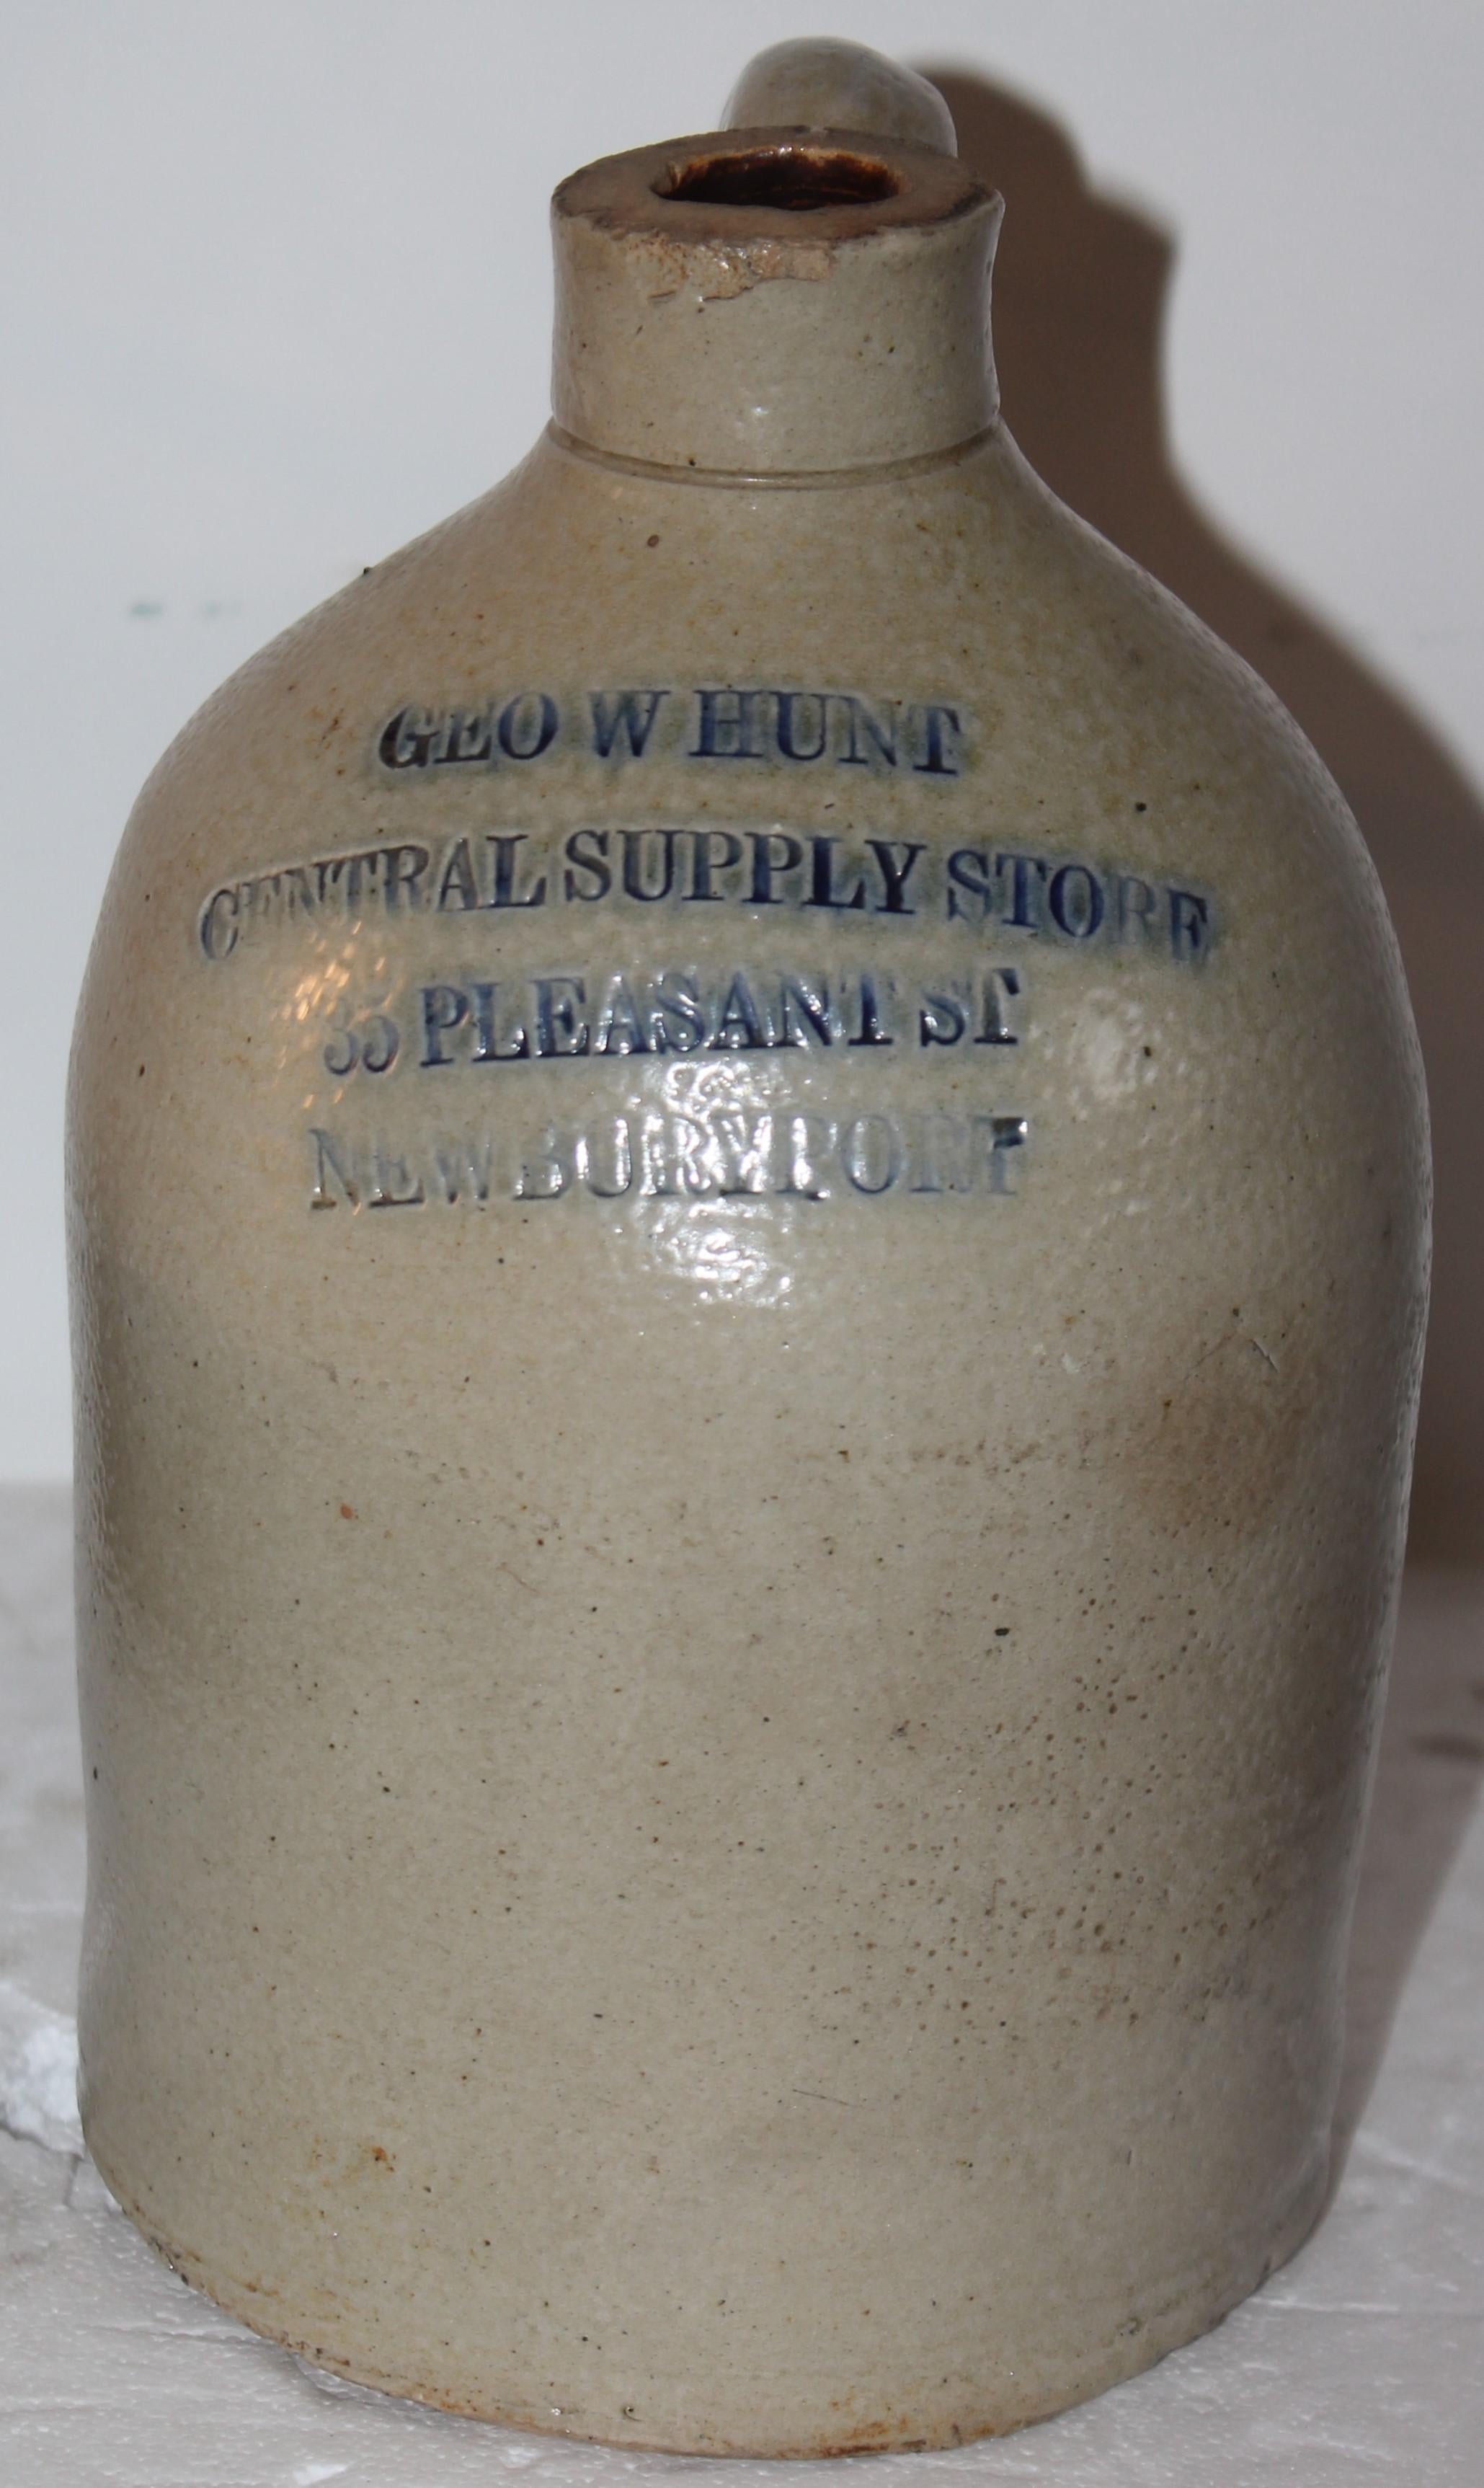 19thc stoneware jug from Newburry

jug reads -
Geo hunt 
Central supply store 
95 Pleasant St
Newbury Port.